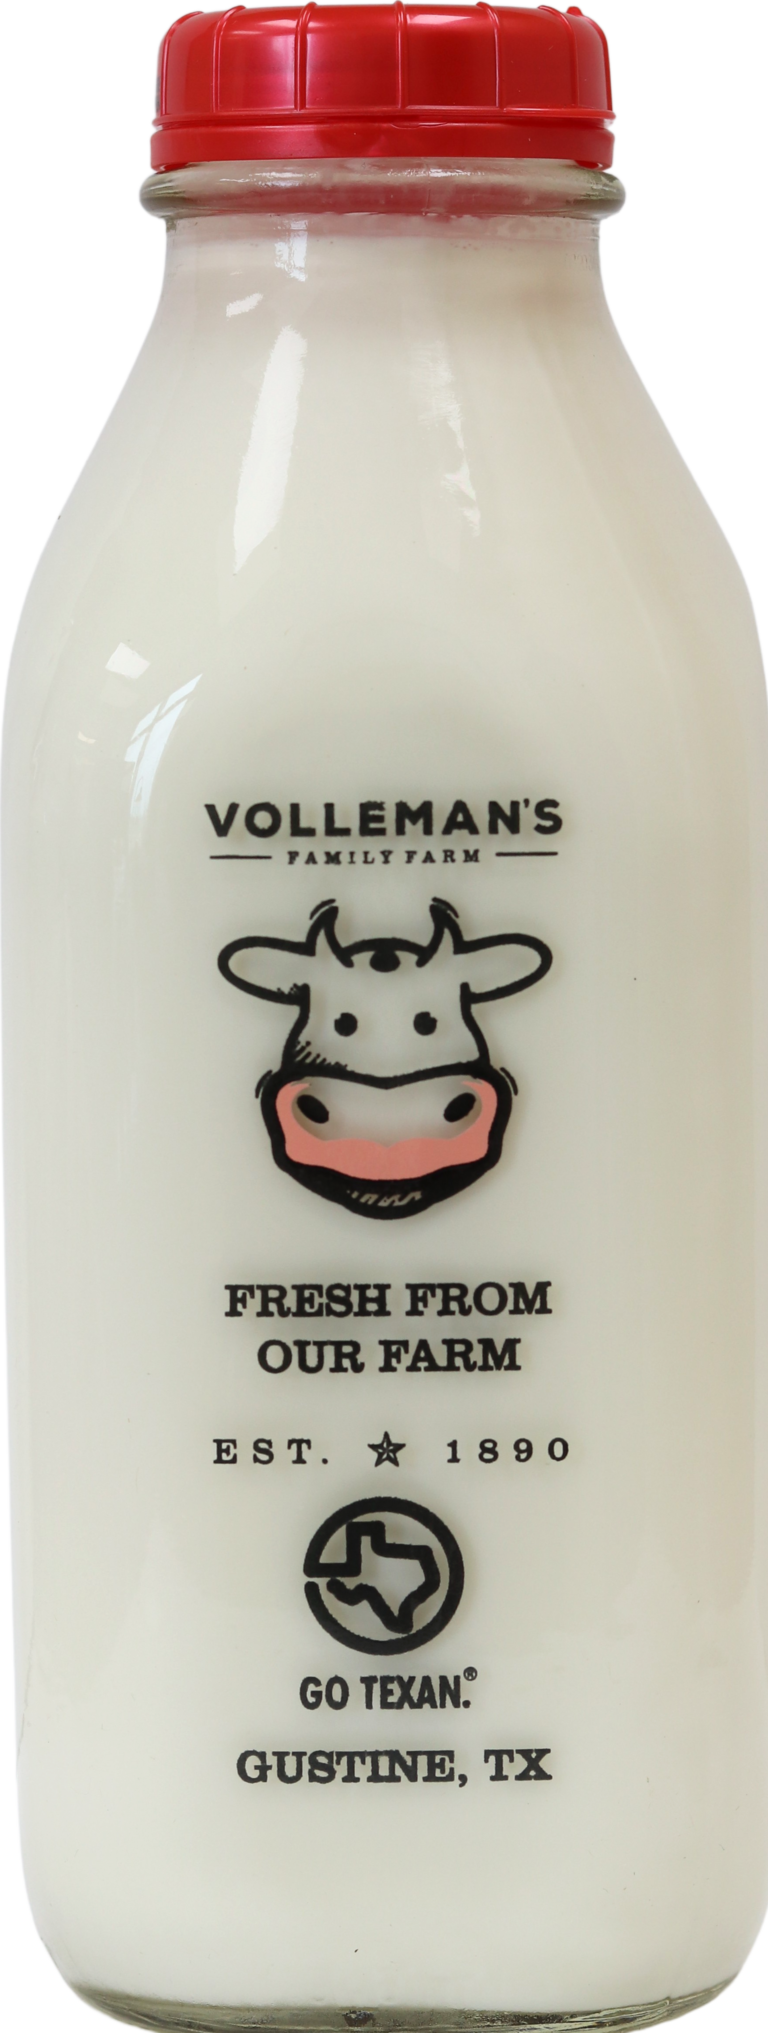 Volleman's whole milk